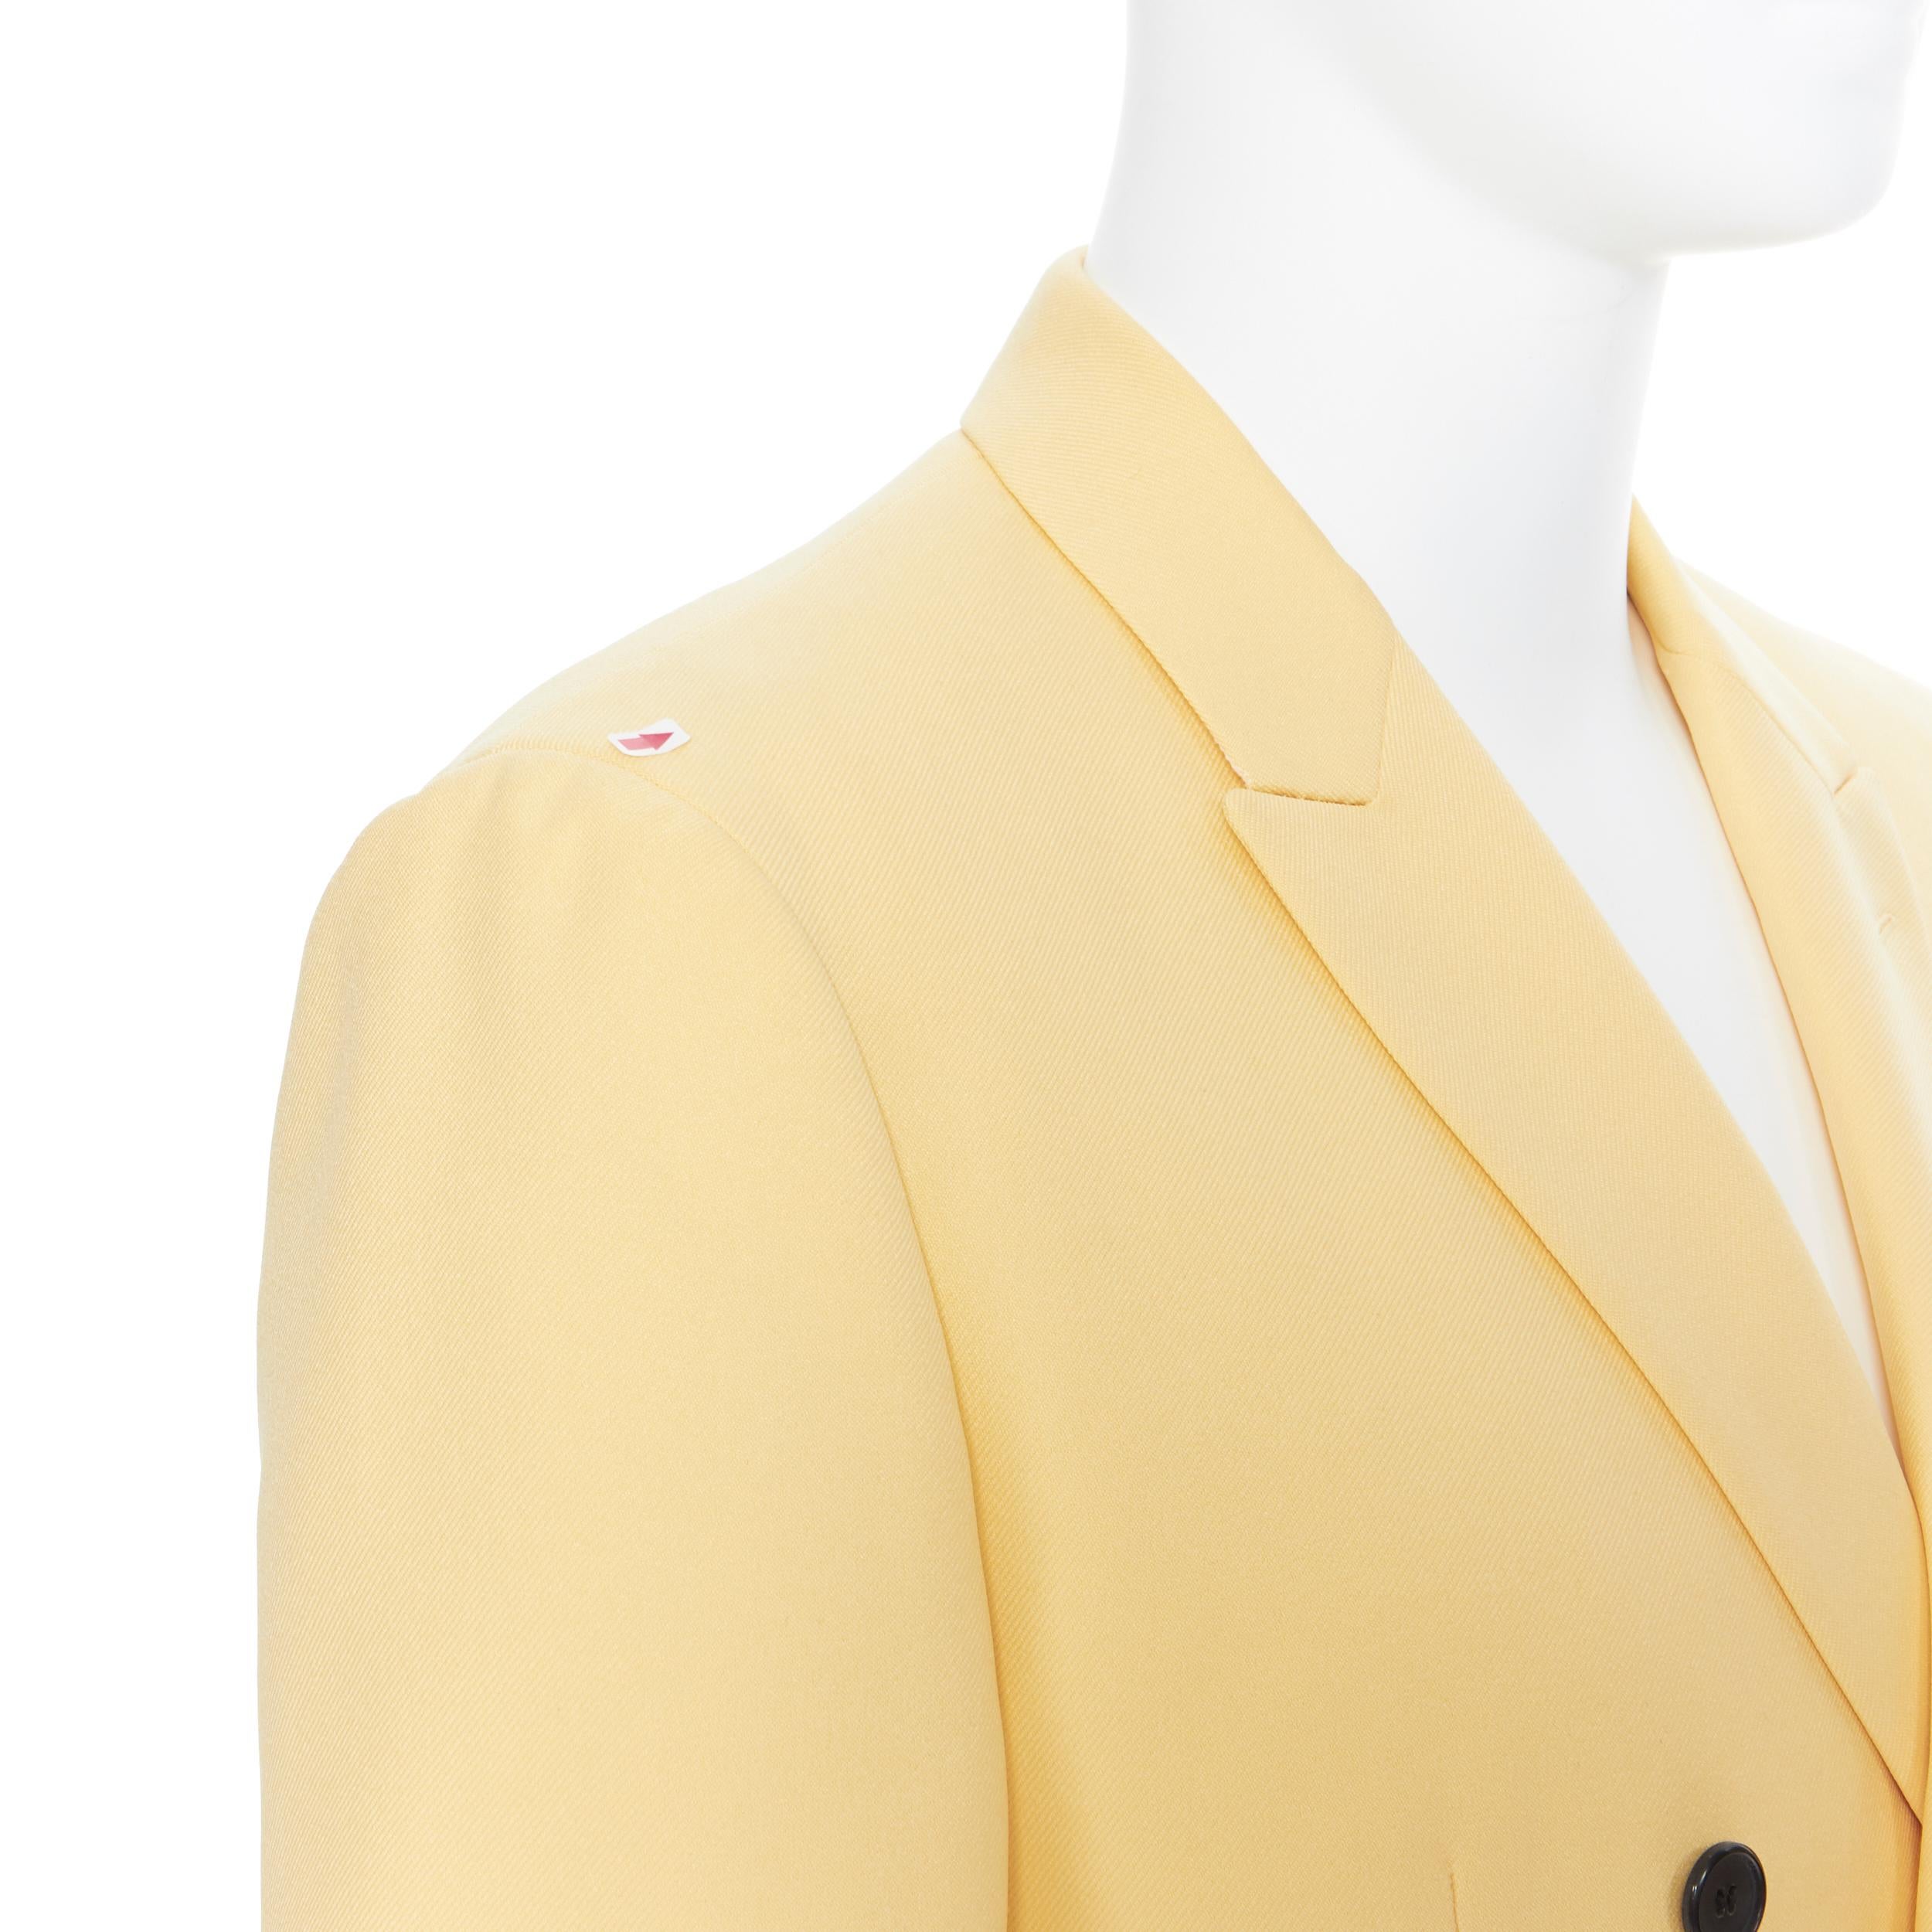 new CALVIN KLEIN 209W39NYC pastel yellow double breasted blazer jacket US40 1